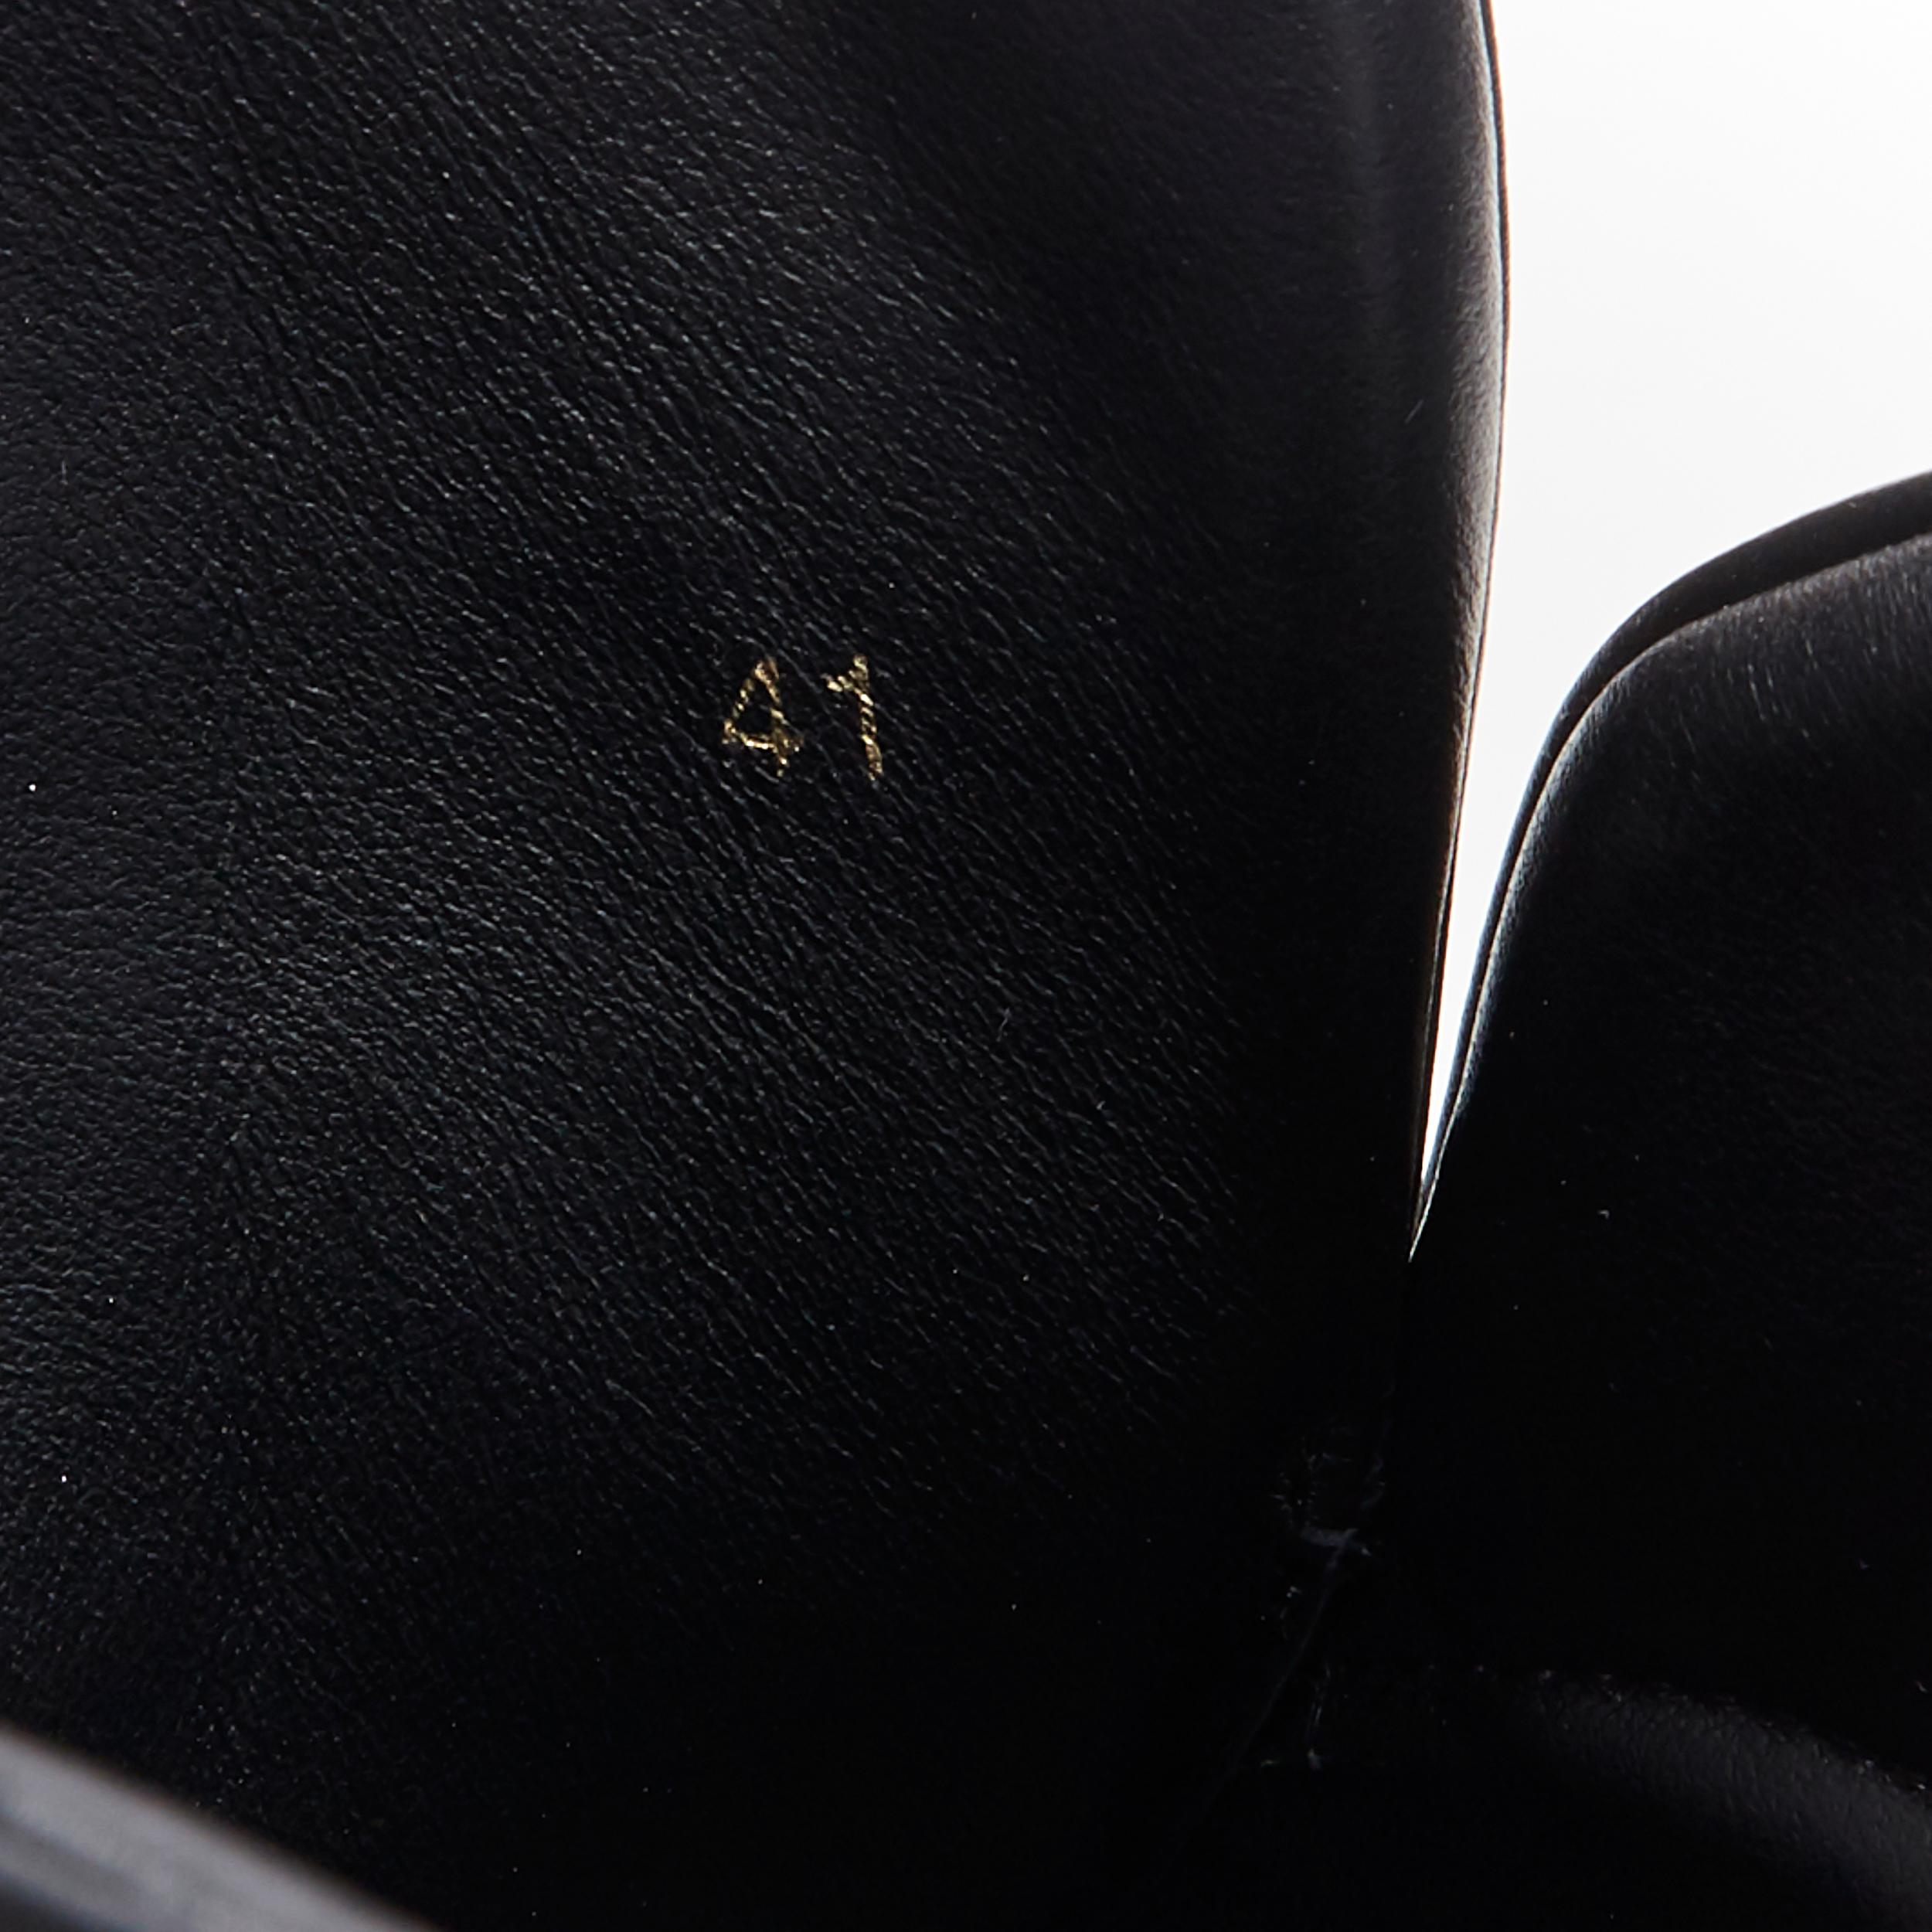 new VERSACE Palazzo gold Medusa black calfskin leather high top sneaker EU41 3